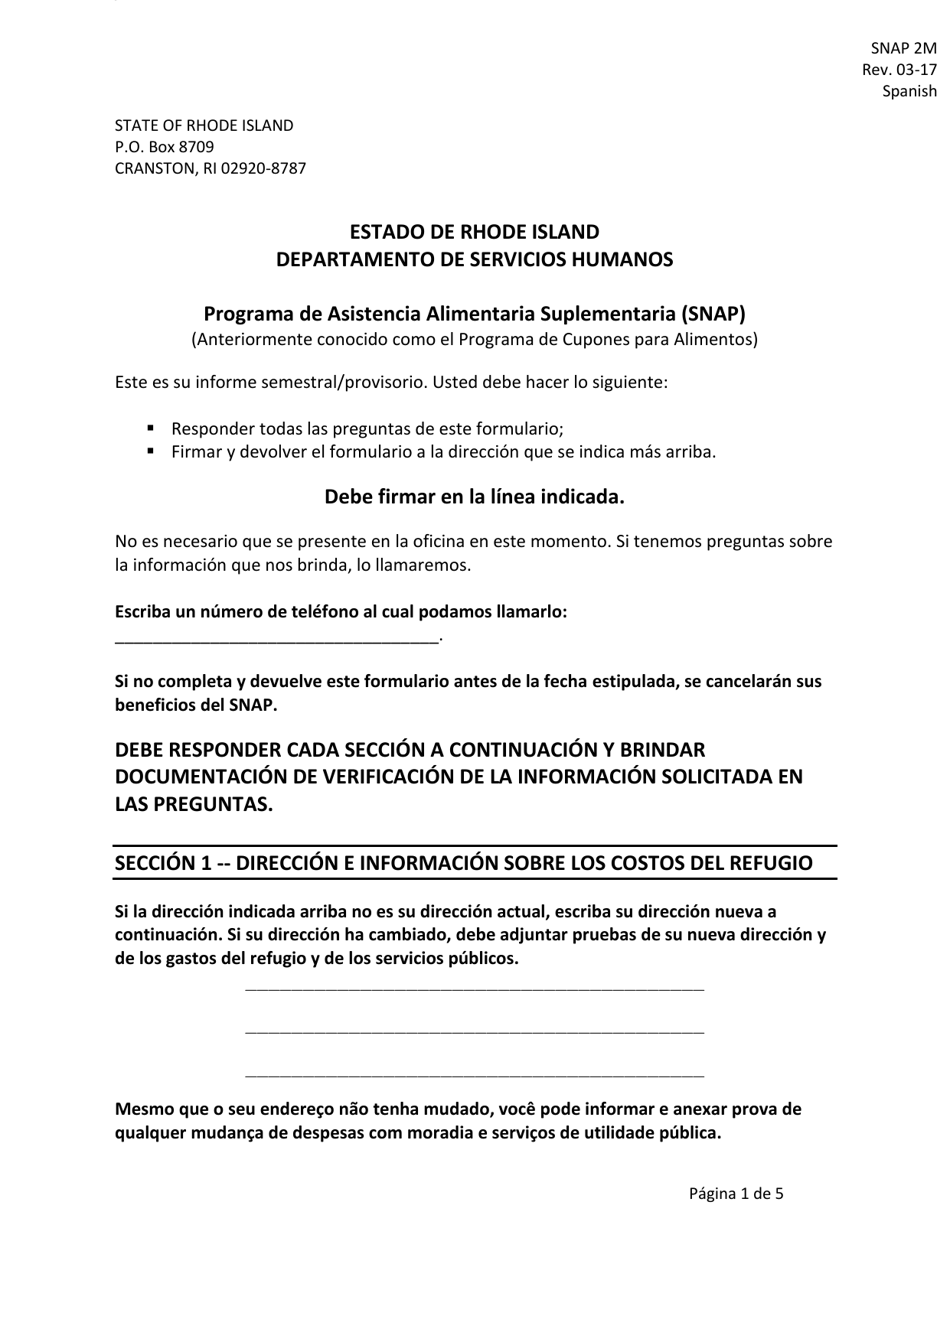 Formulario SNAP2M Interim Report Form - Rhode Island (Spanish), Page 1